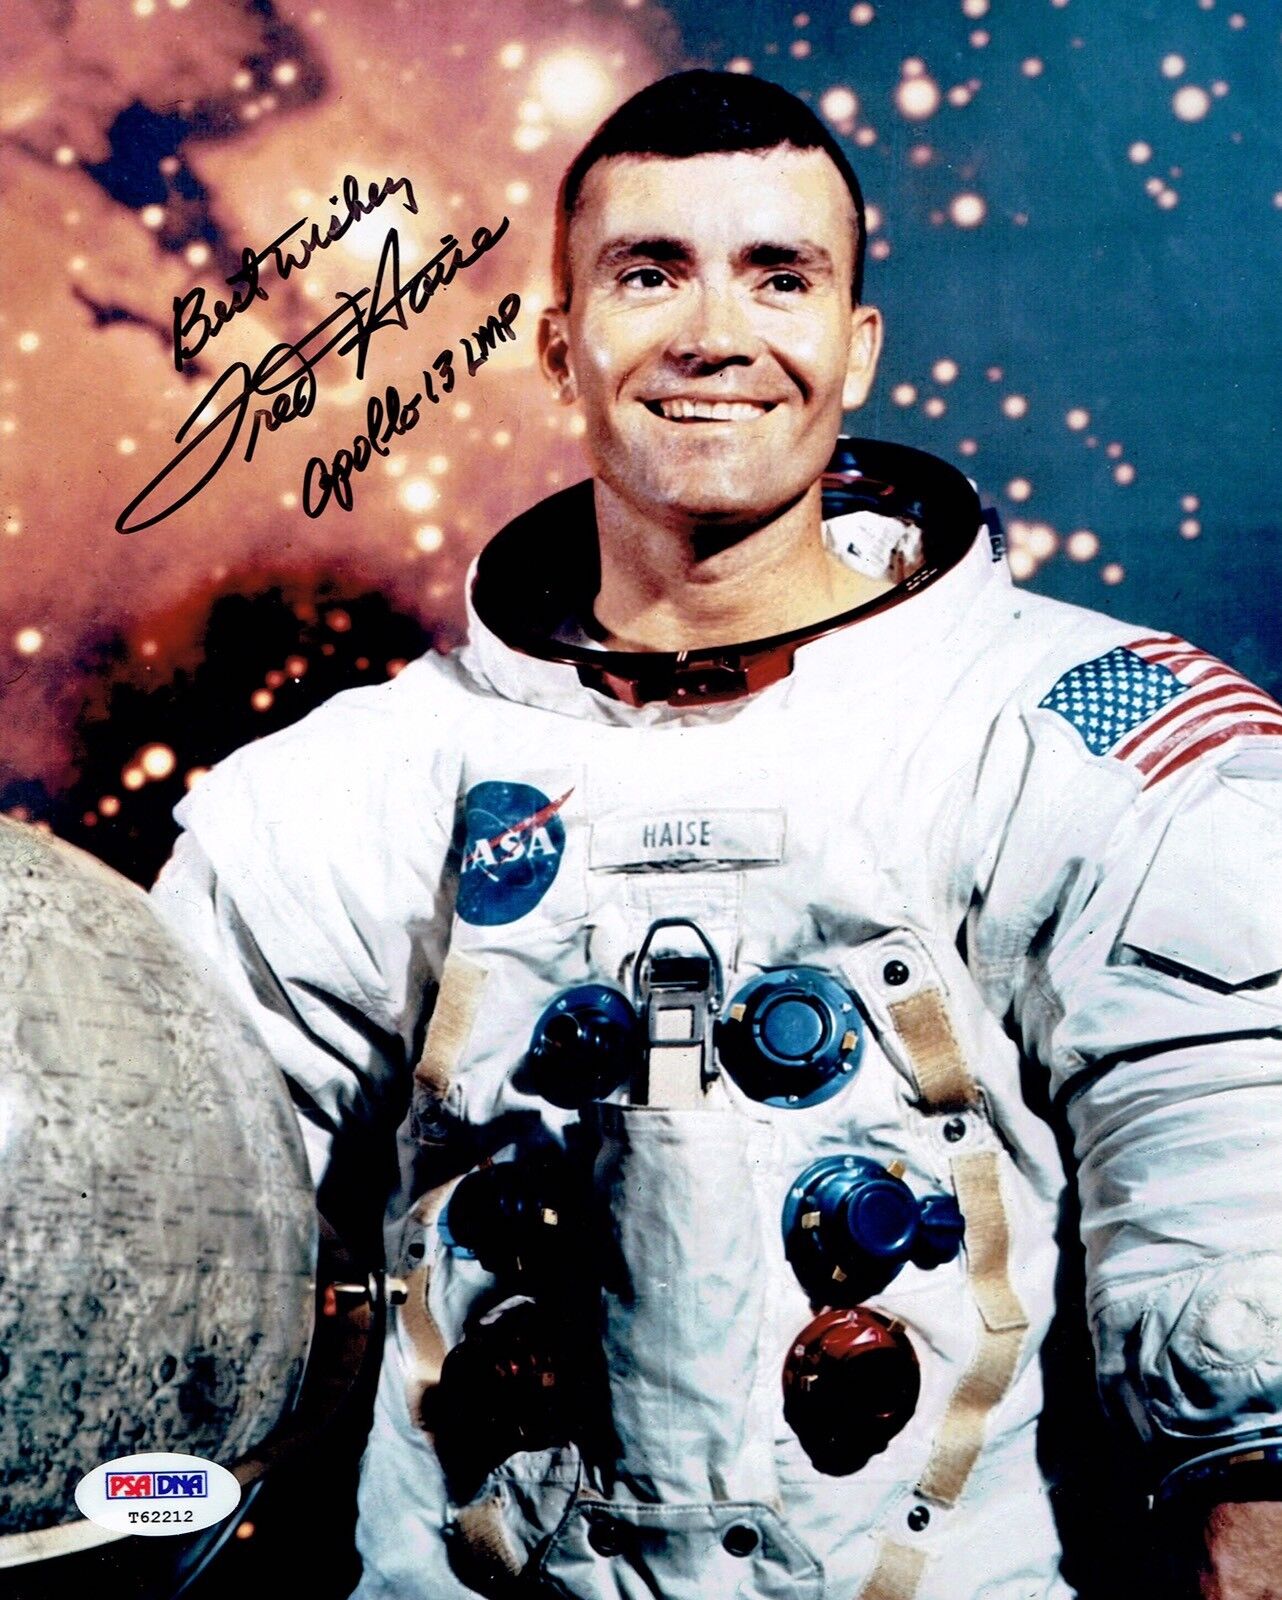 NASA HOF Apollo 13 Astronaut Fred HAISE Signed Autographed 8x10 Photo PSA/DNA